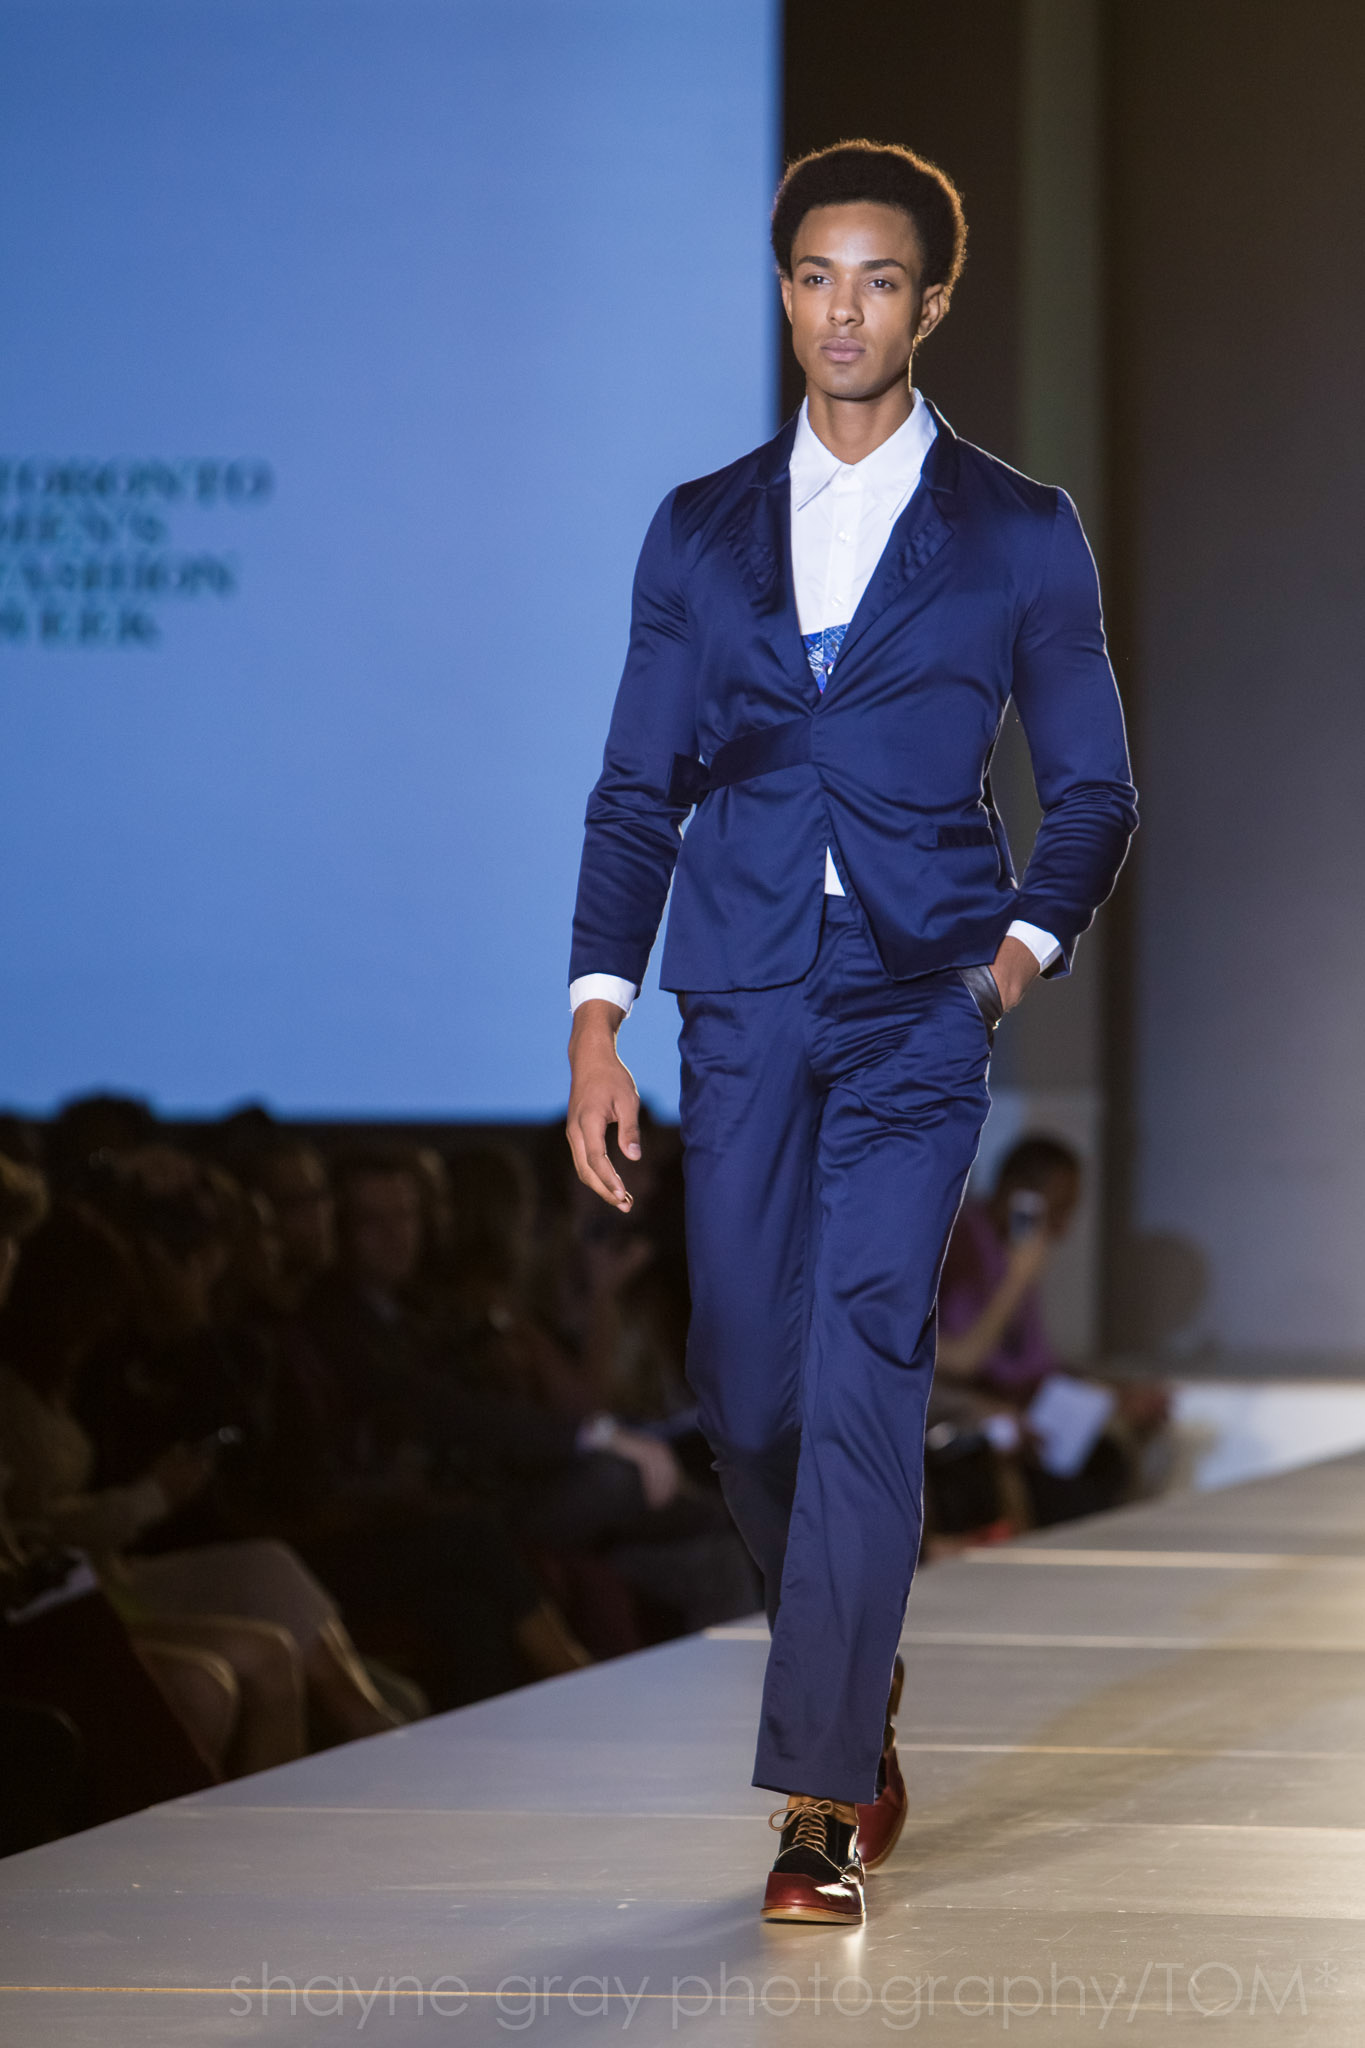 Shayne-Gray-Toronto-men's-fashion_week-TOM-paul-nathaphol-7959.jpg